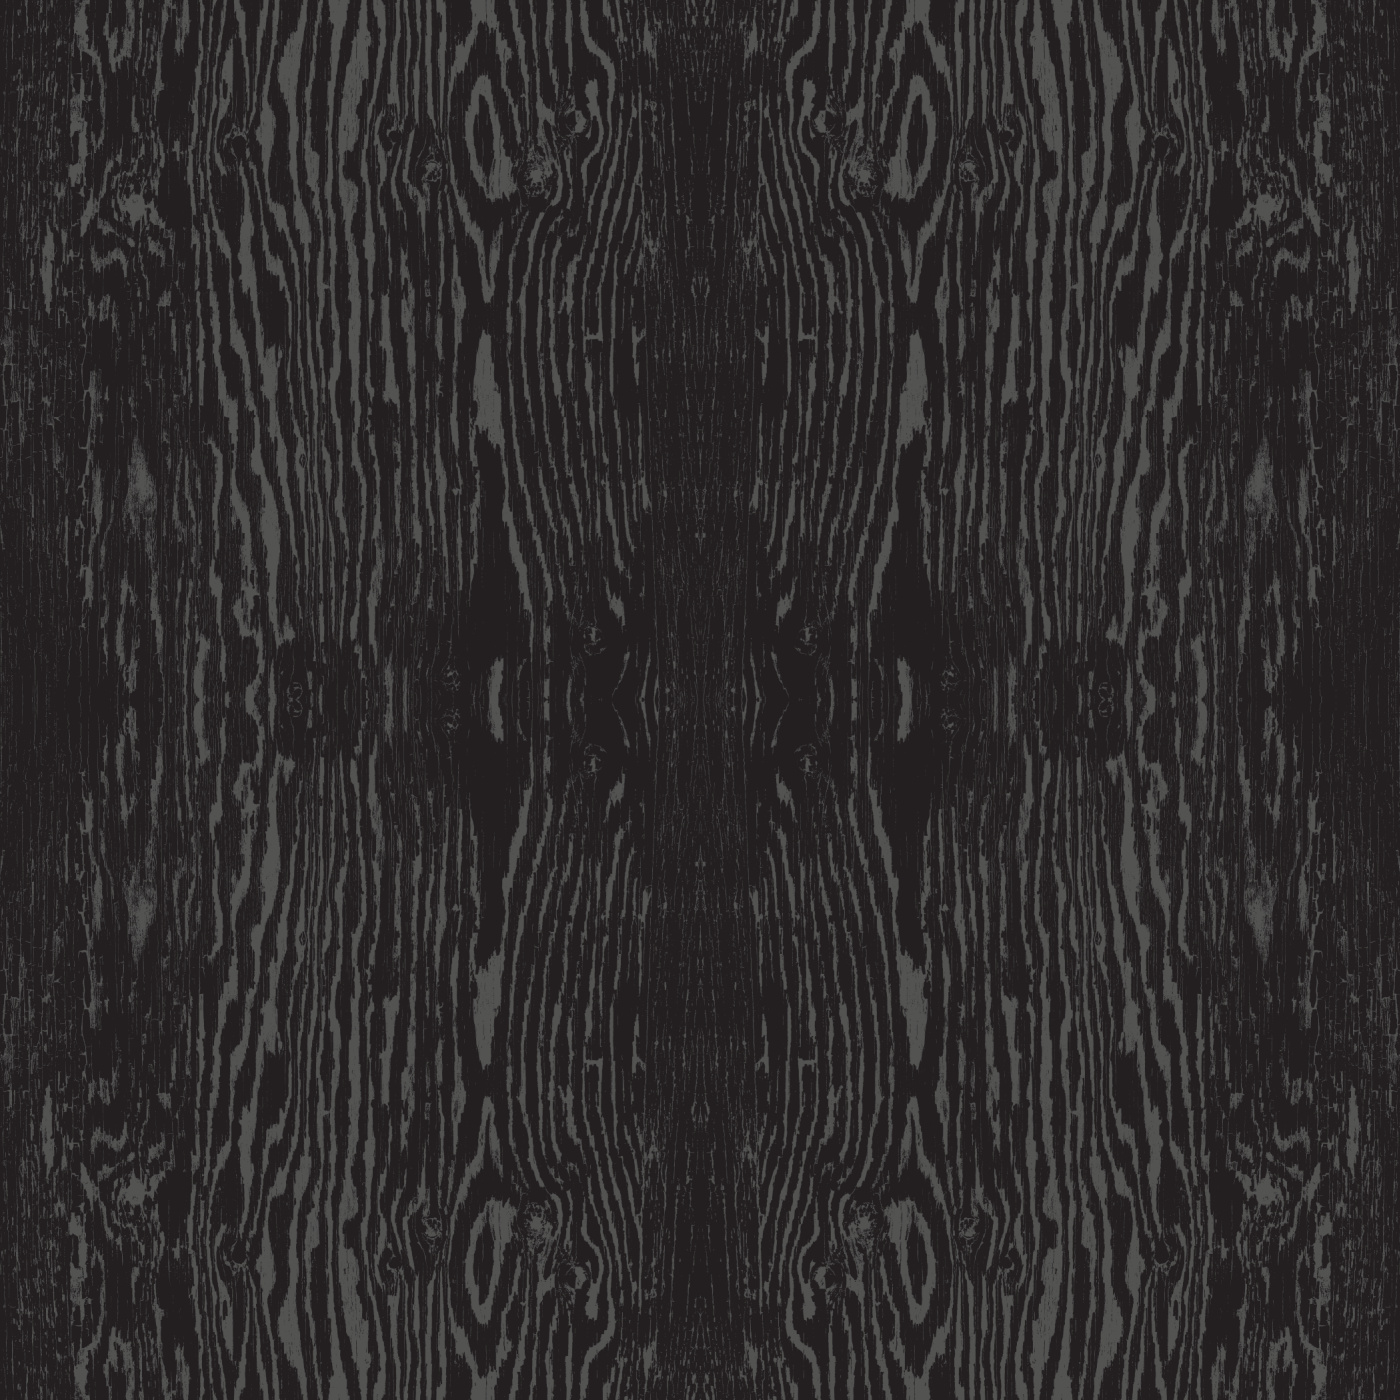 Mirrored Wood Wallpaper